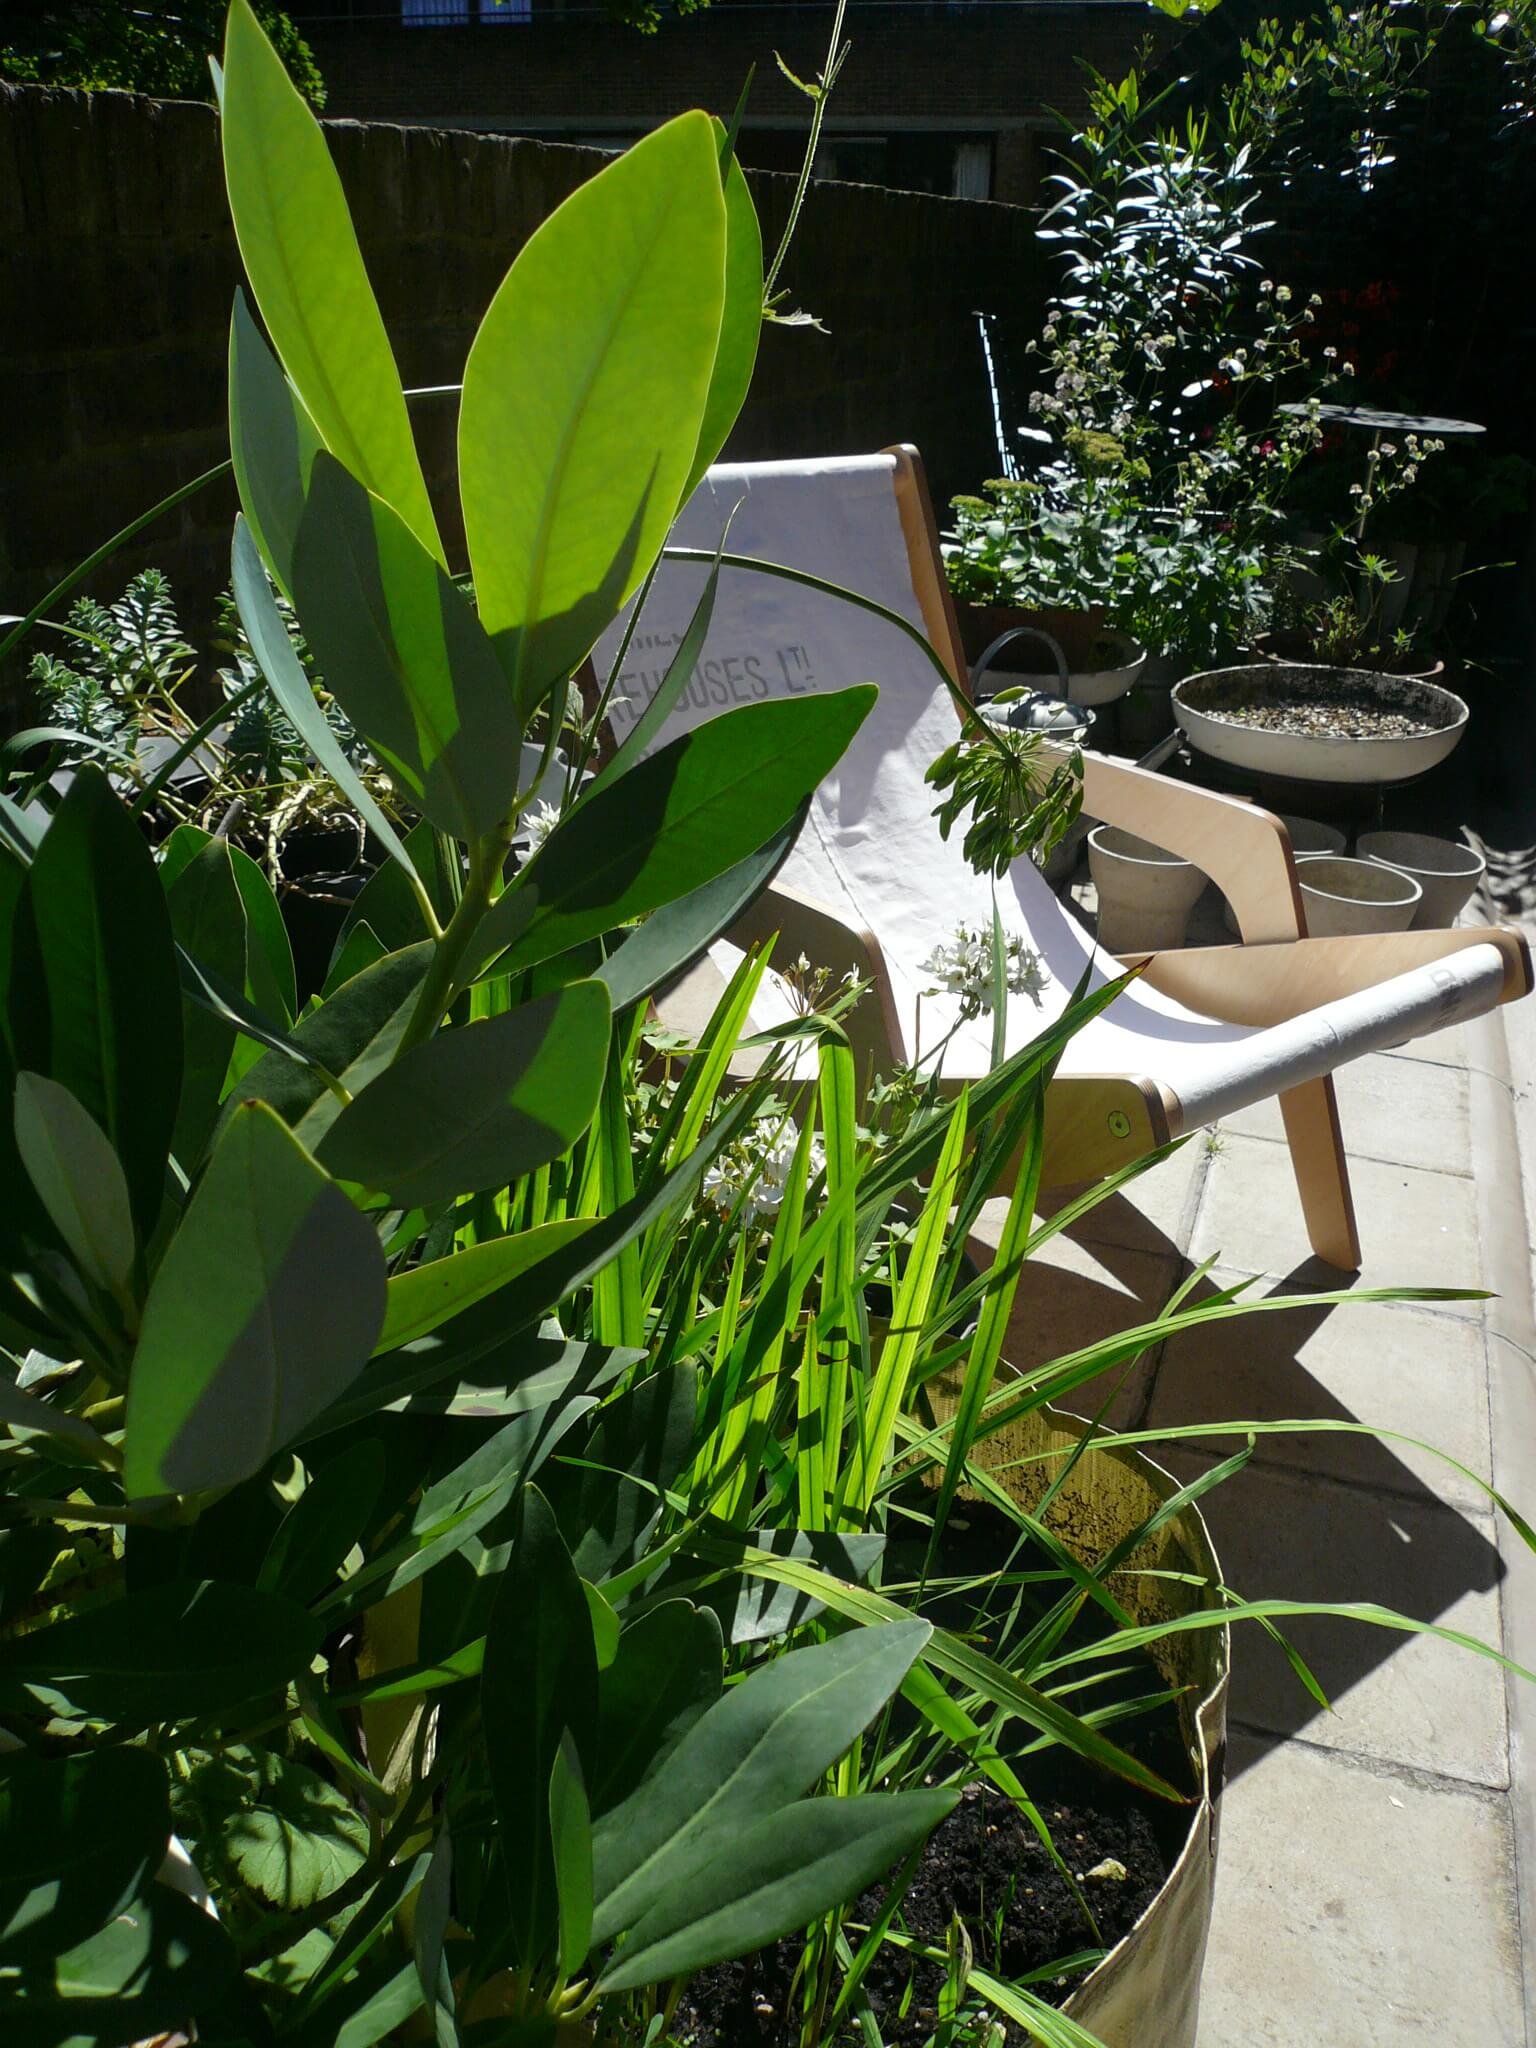 furniture-design-slip-chair-outdoor-plantsJPG.jpeg